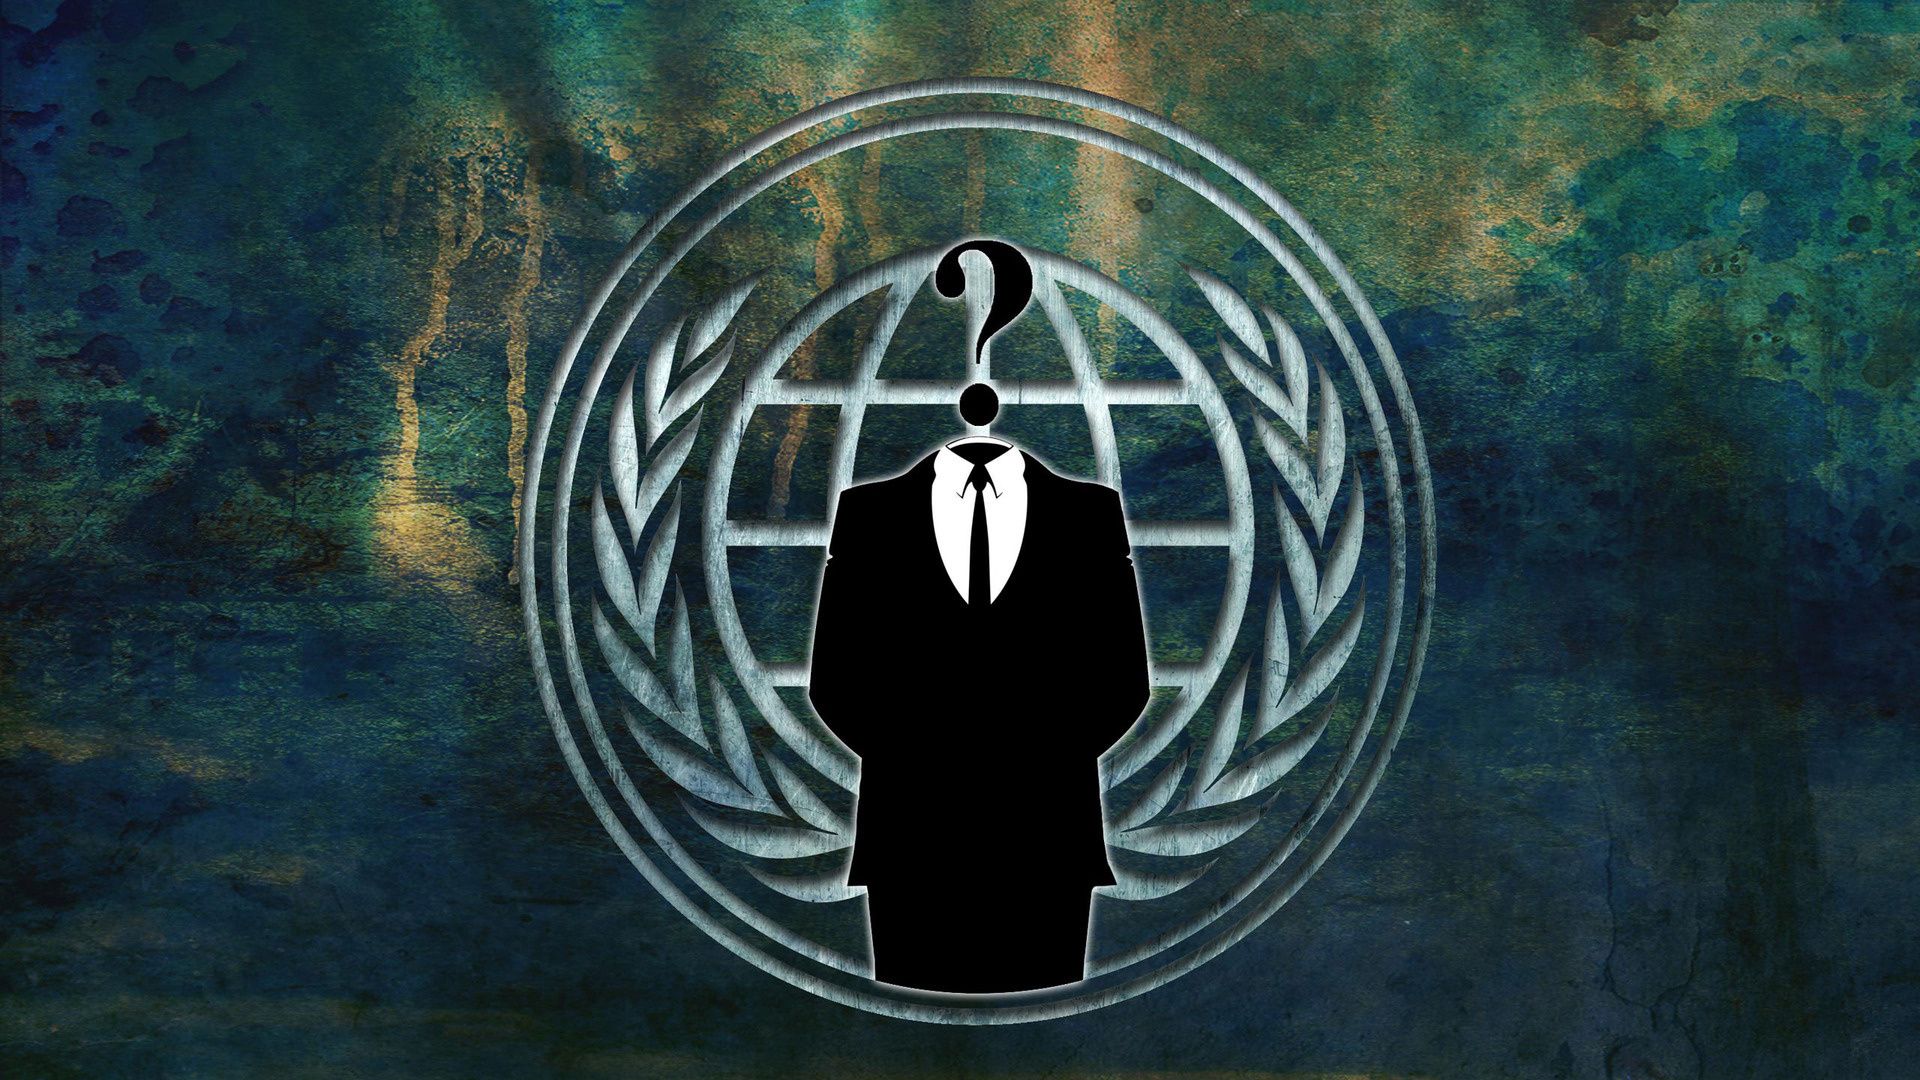 Pin on anonymous logo emblem motto